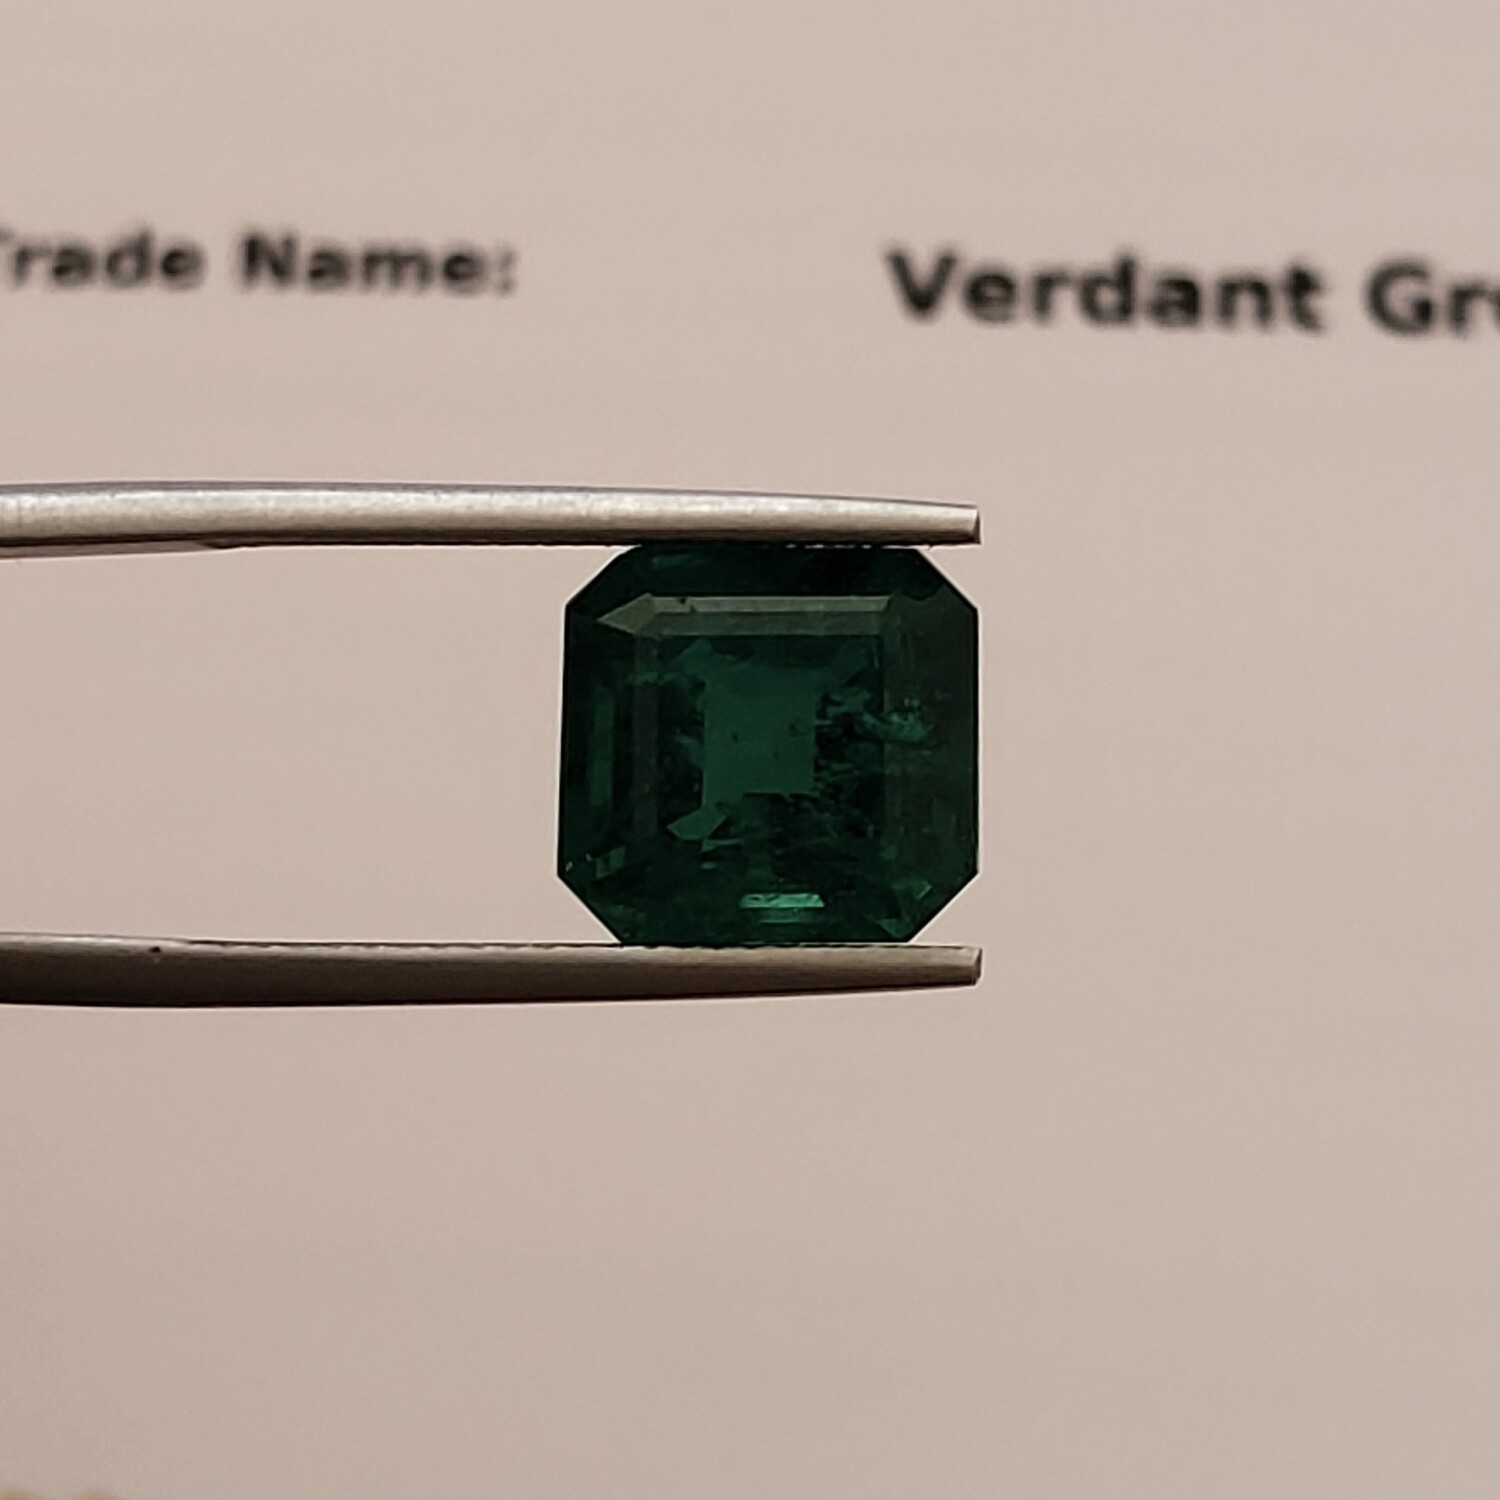 Sq.Emerald cut 6.04 ct